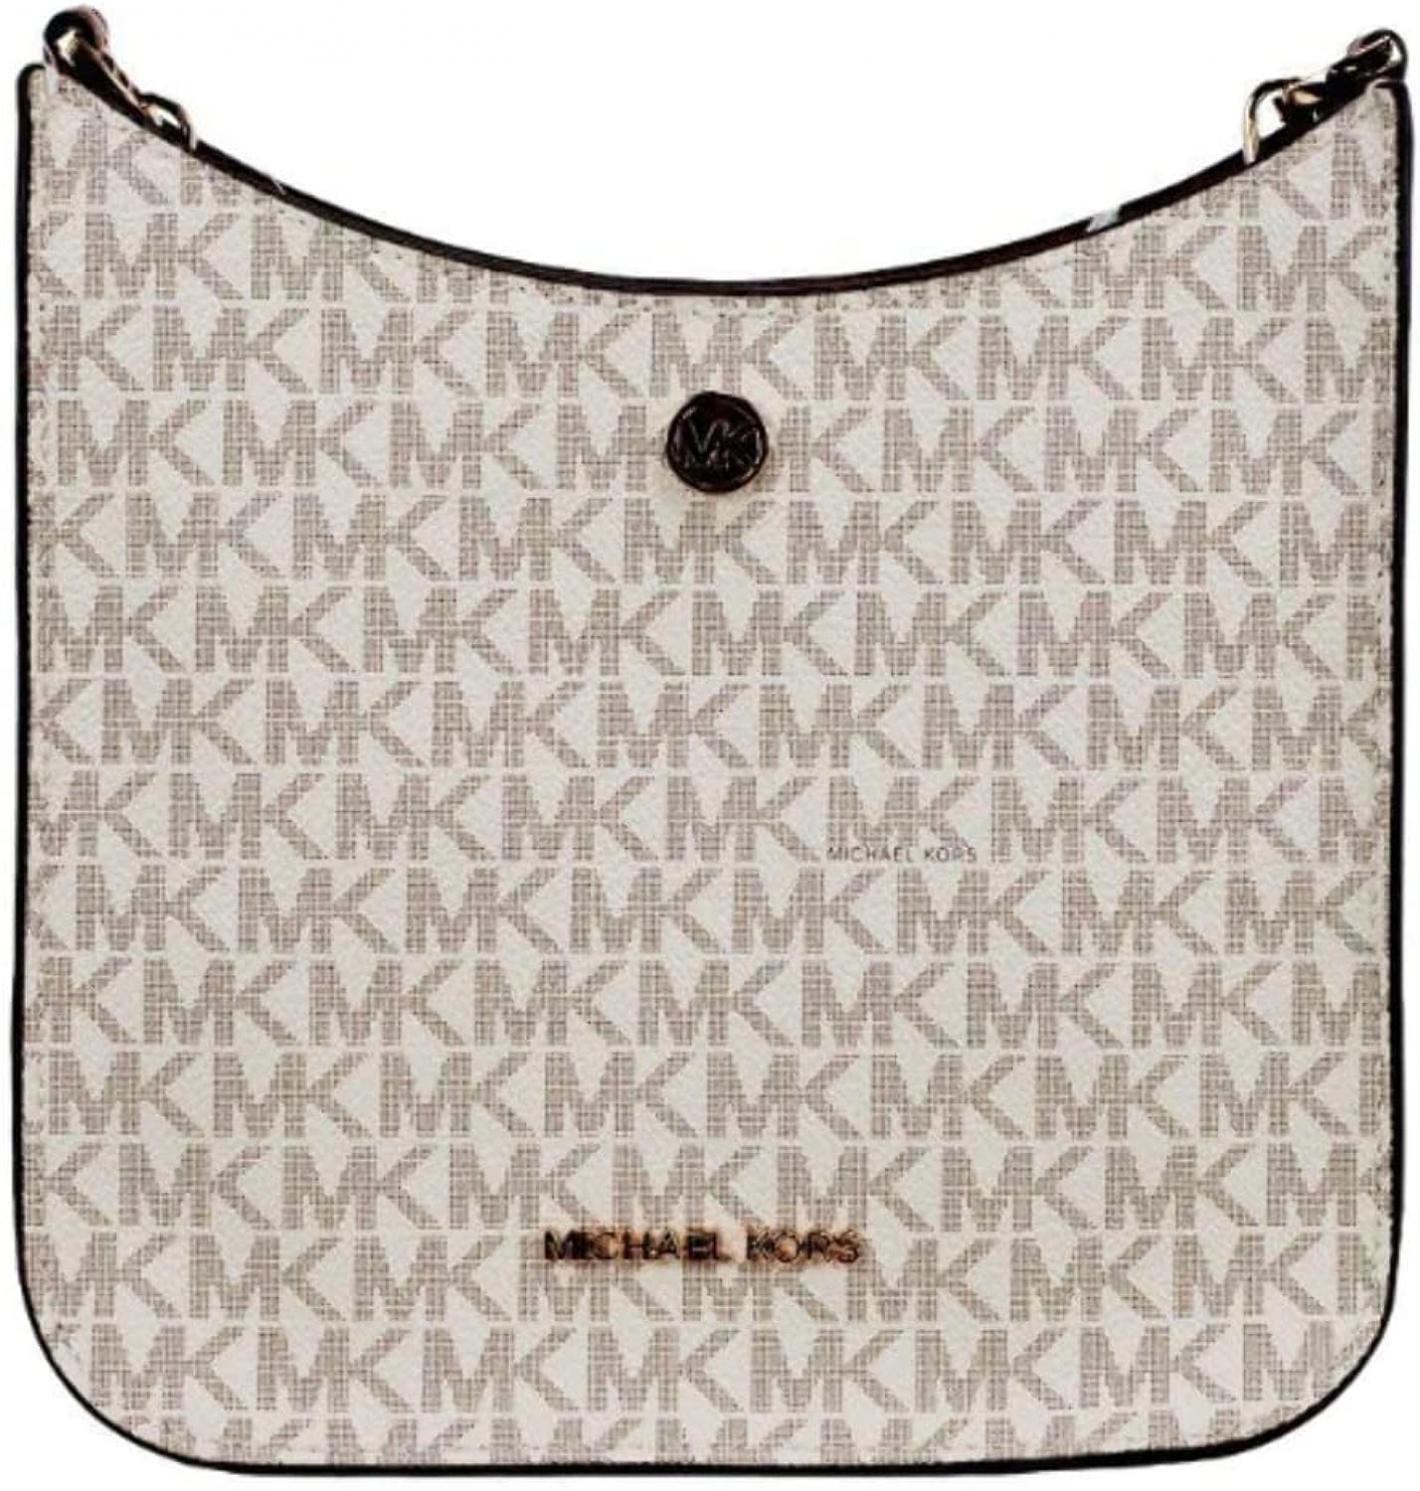 Michael Kors Briley Small Messenger Crossbody Signature Handbag